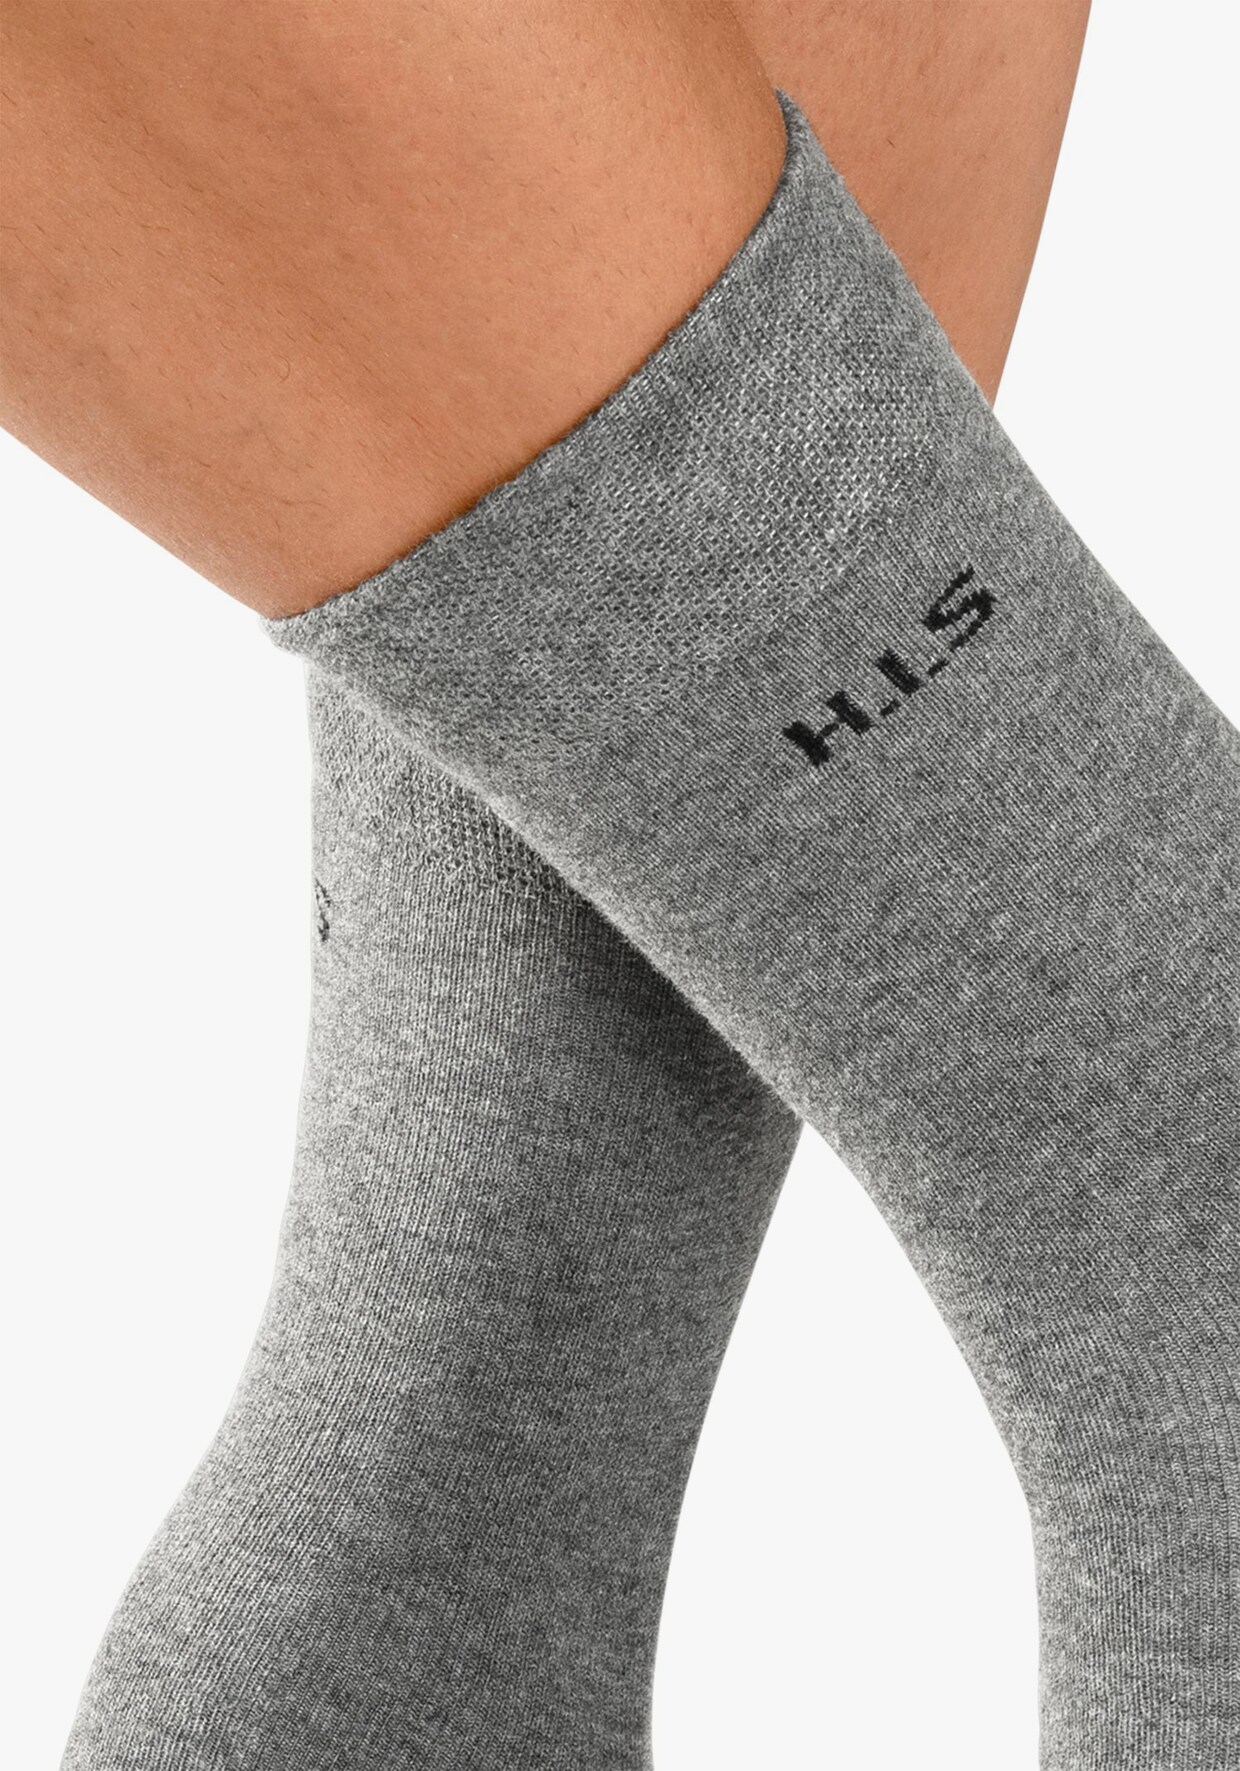 H.I.S Socken - 2x grau, 2x anthrazit